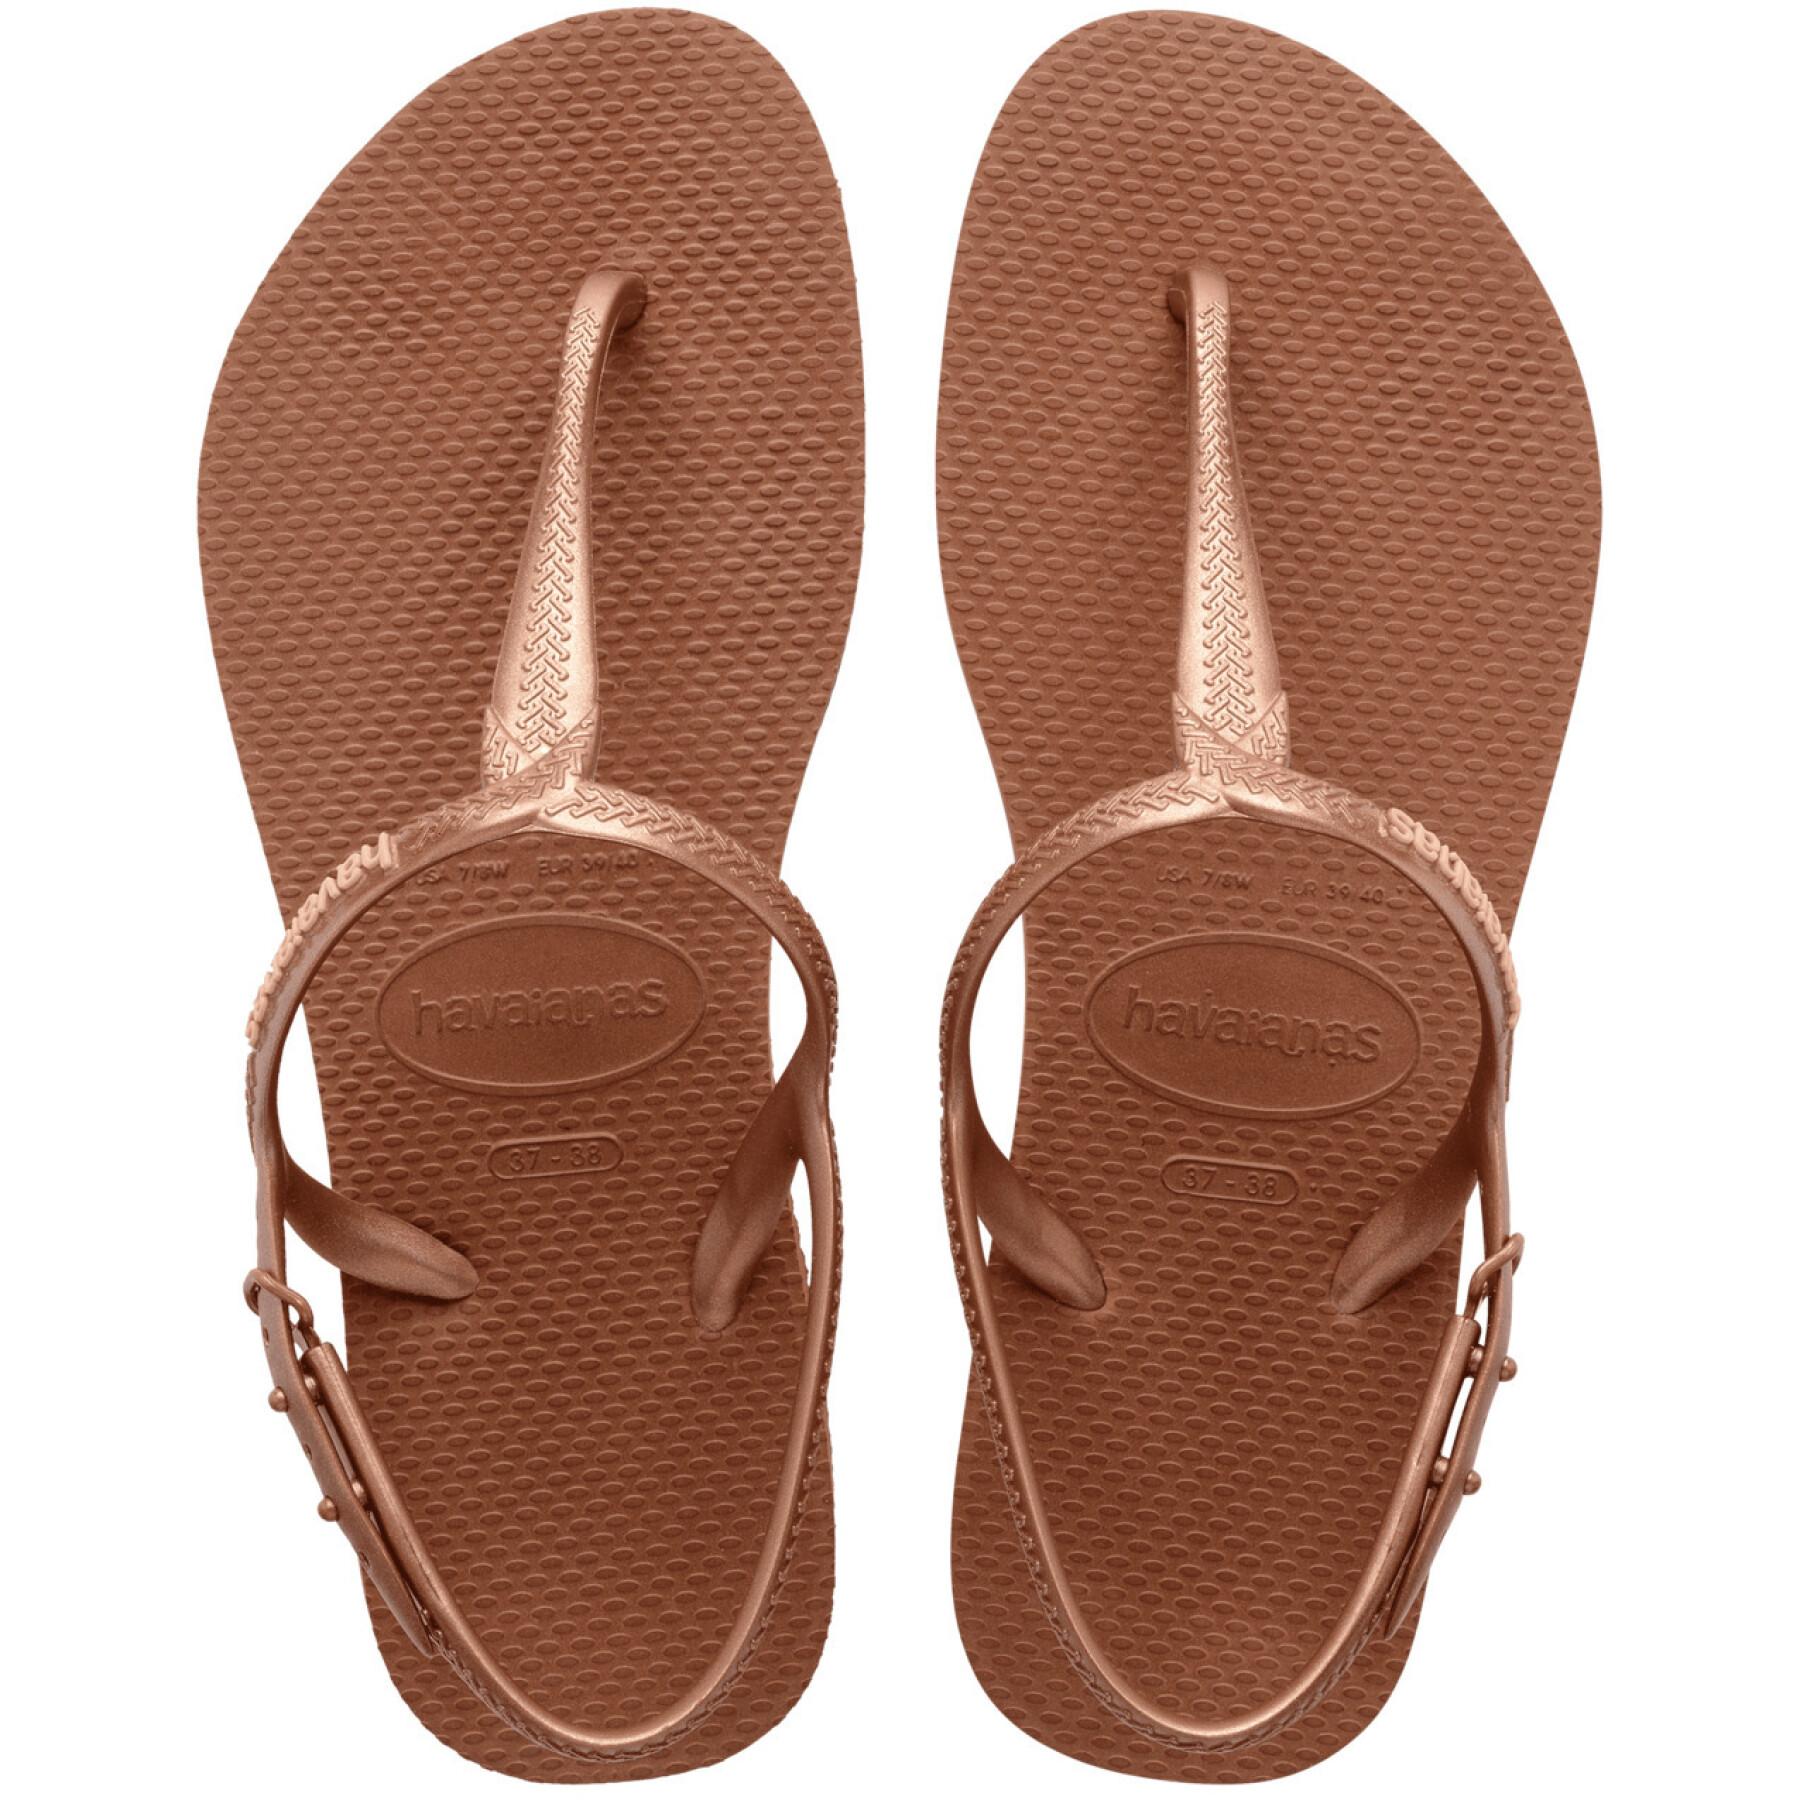 Women's sandals Havaianas Twist